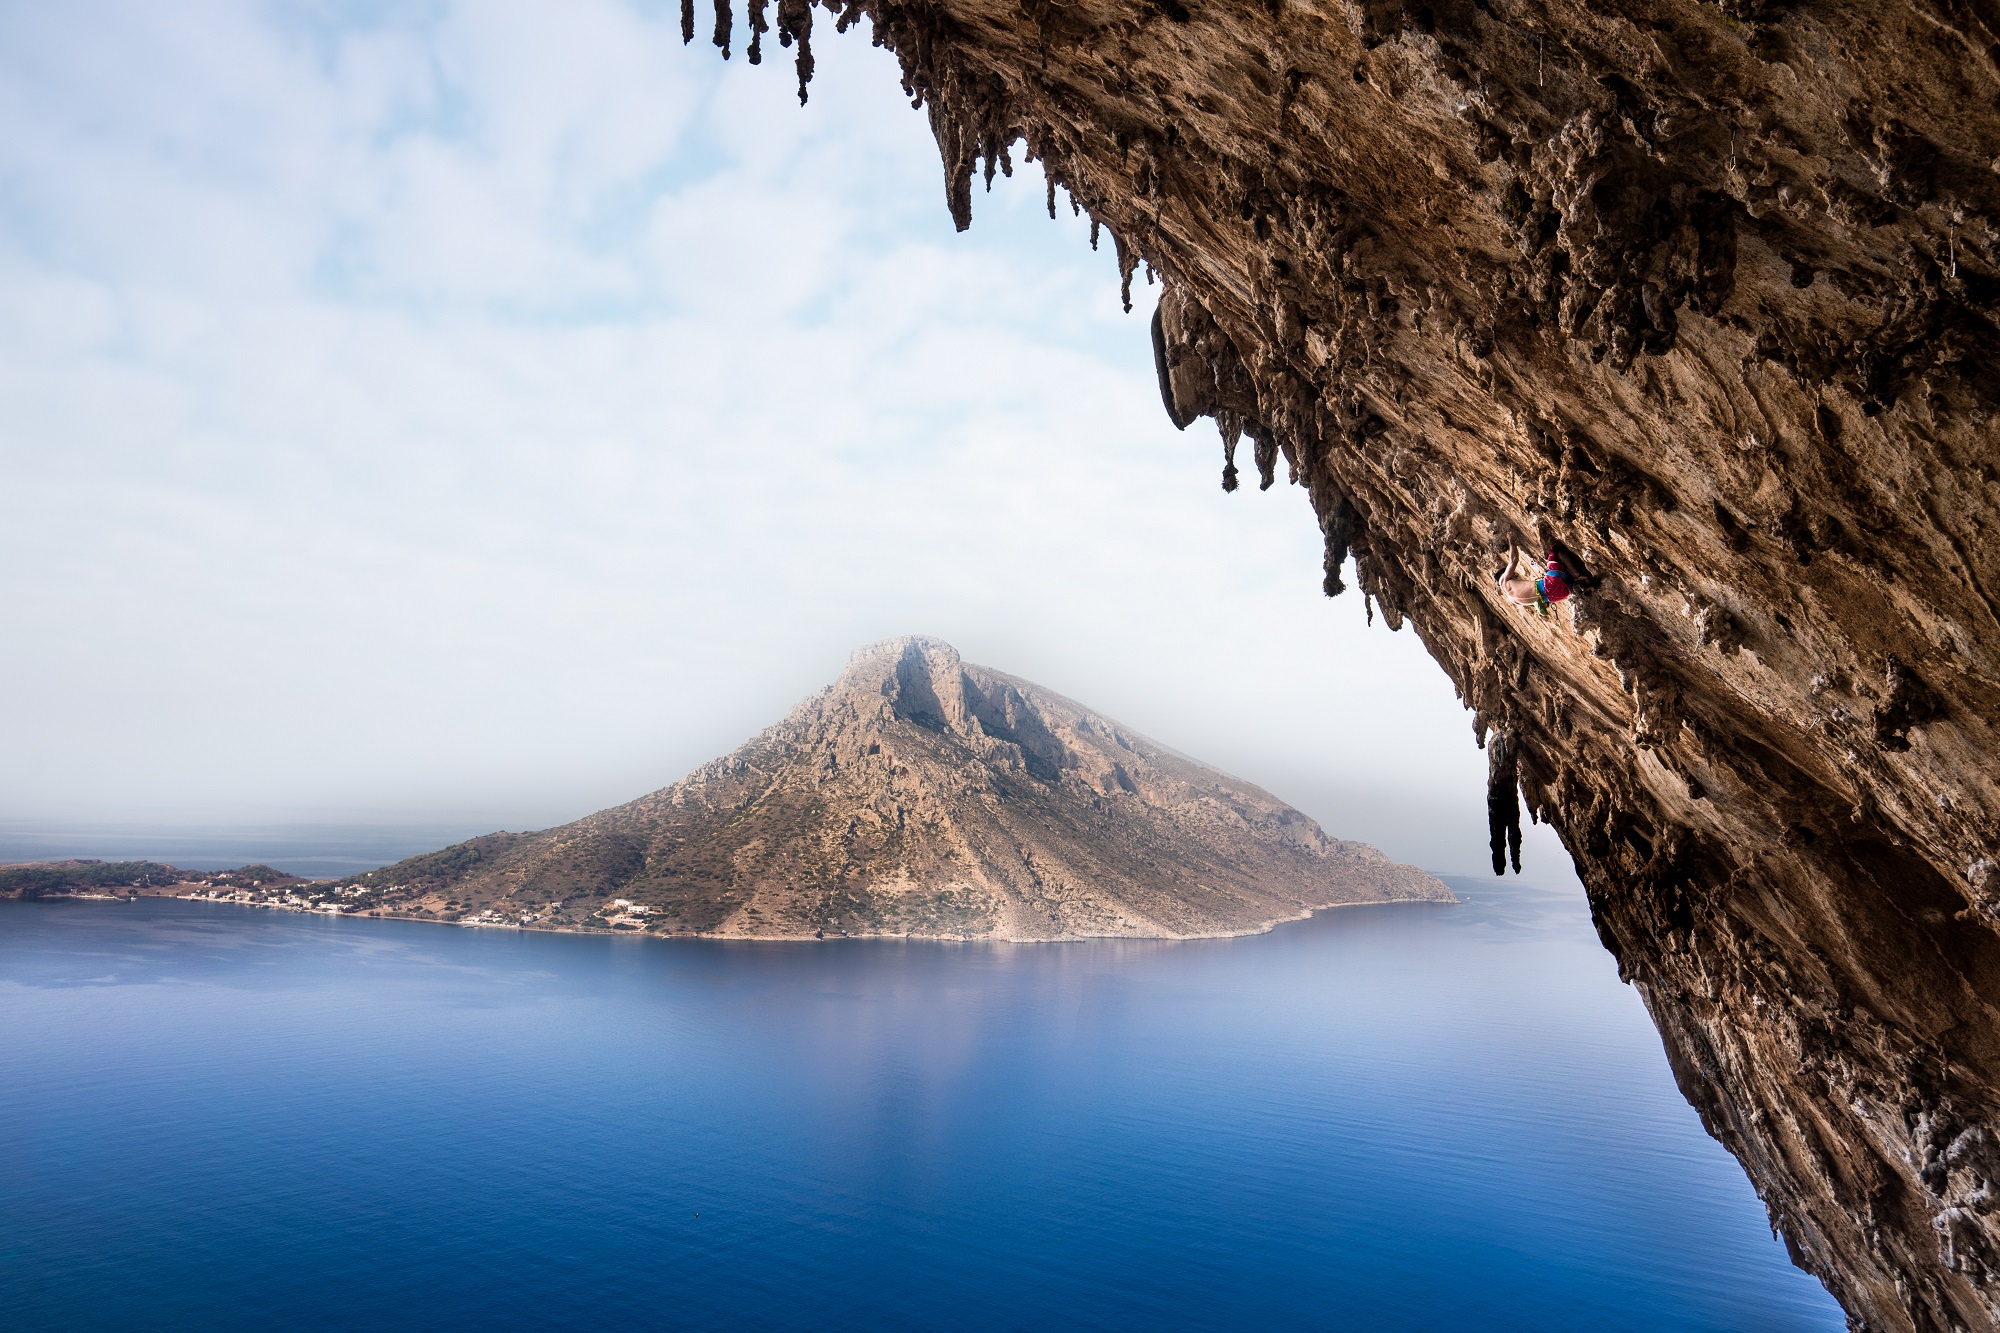 Grand Grotta in Telendos, Kalymnos' neighboring island, is another great climbing destination